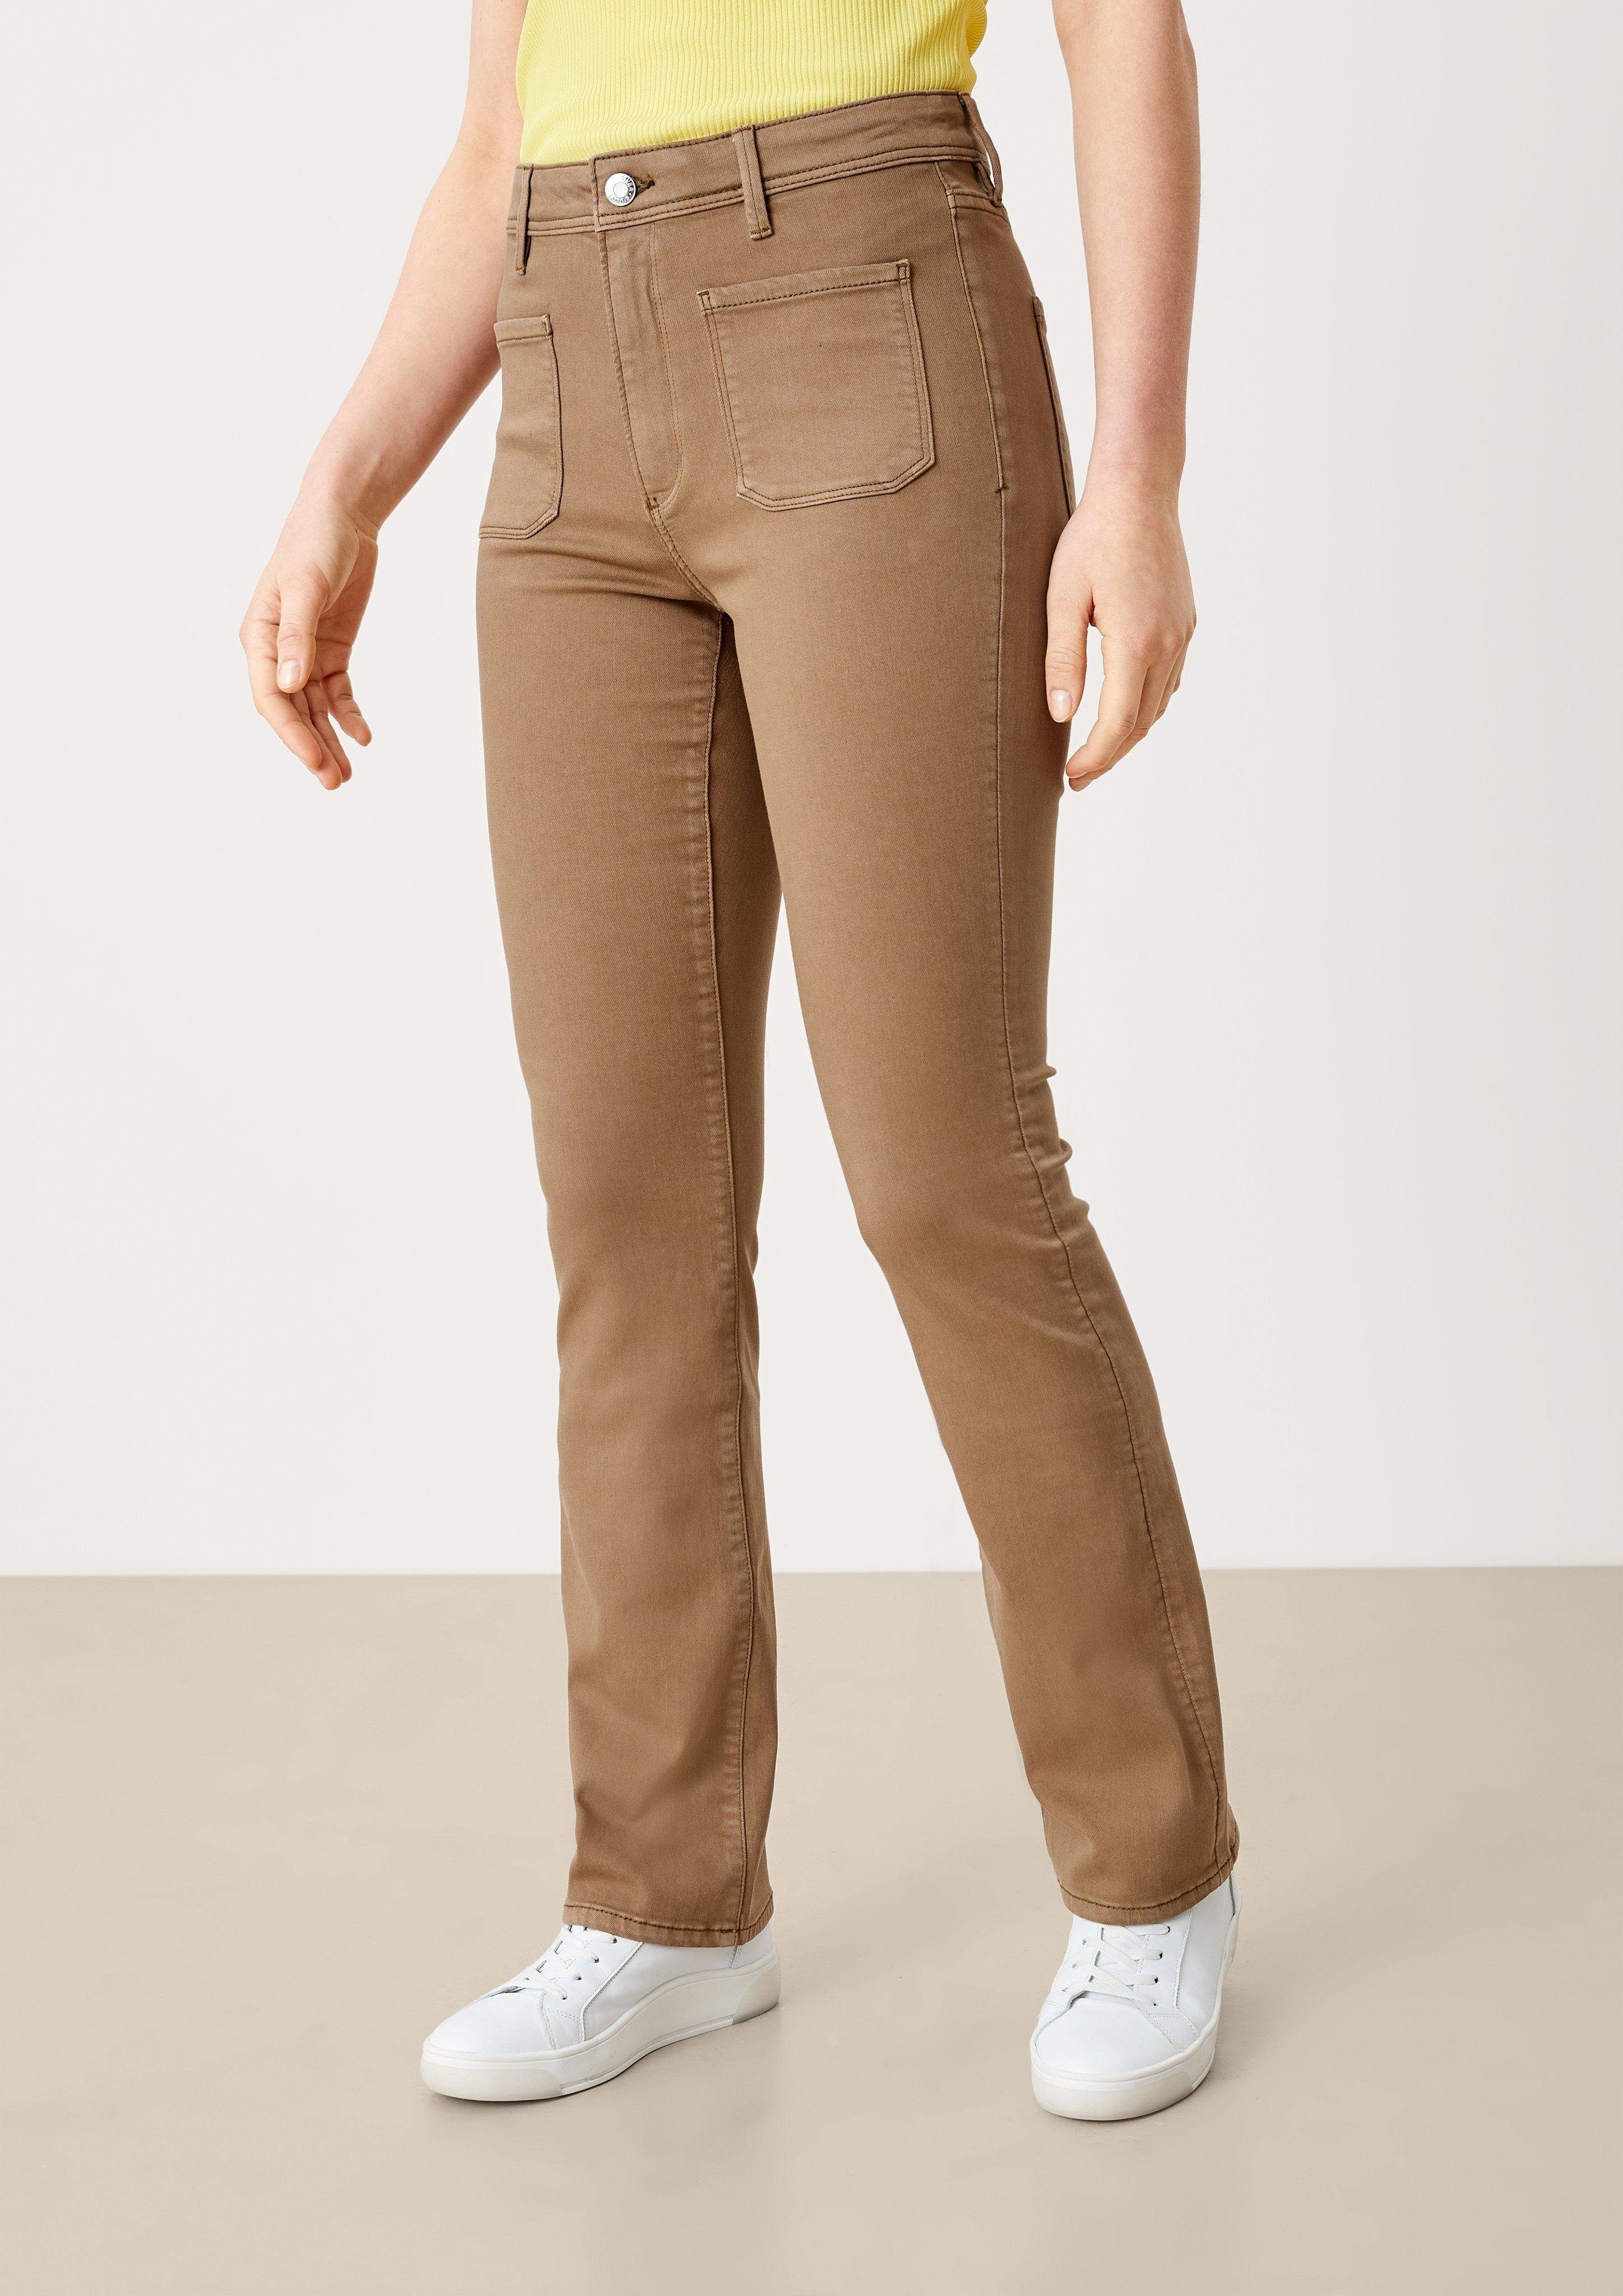 / Fit / Bootcut 5-Pocket-Jeans Rise Slim Beverly Jeans Leg / Leder-Patch s.Oliver brown High